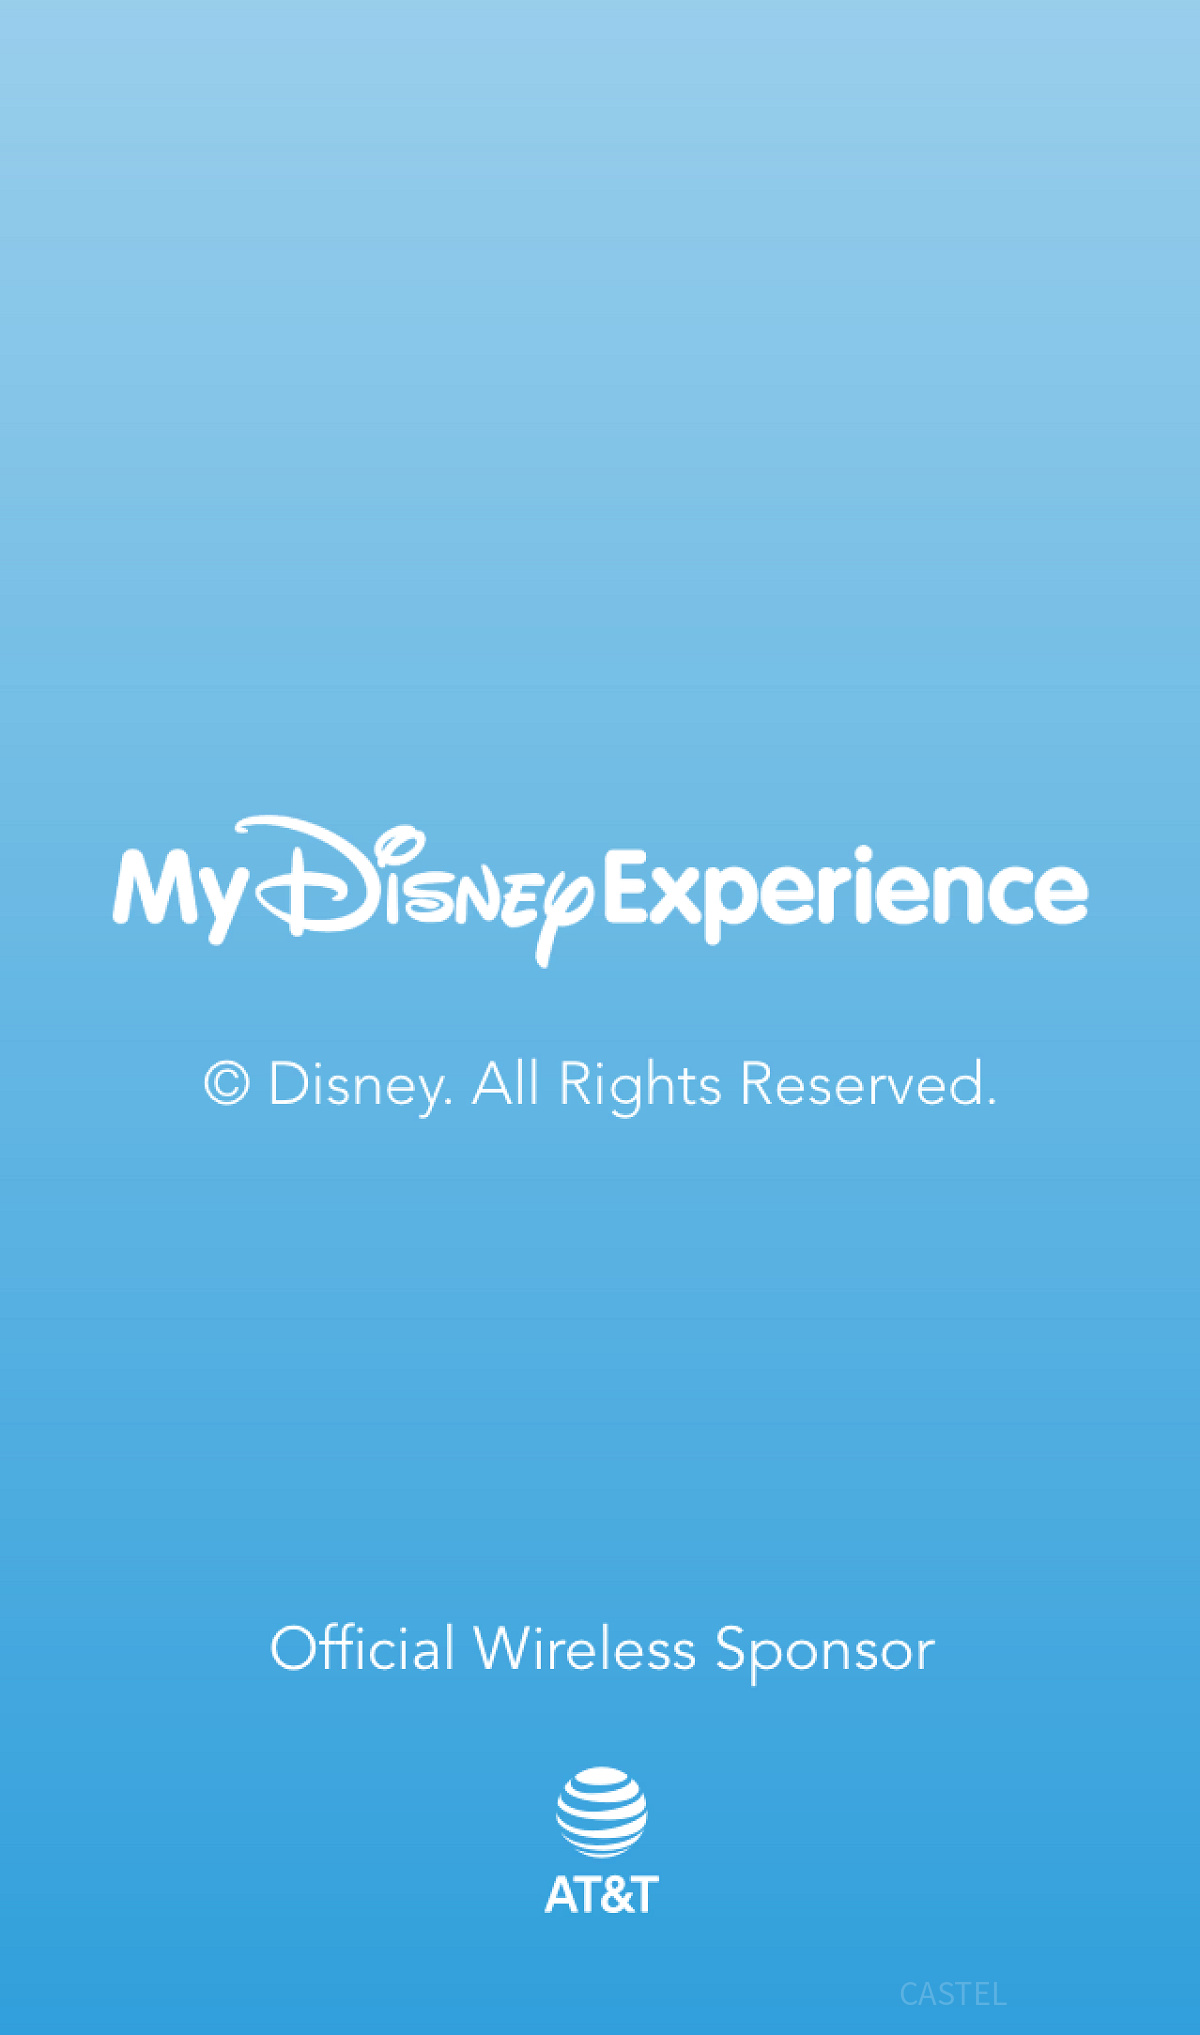 WDW専用公式アプリ「My Disney Experience」